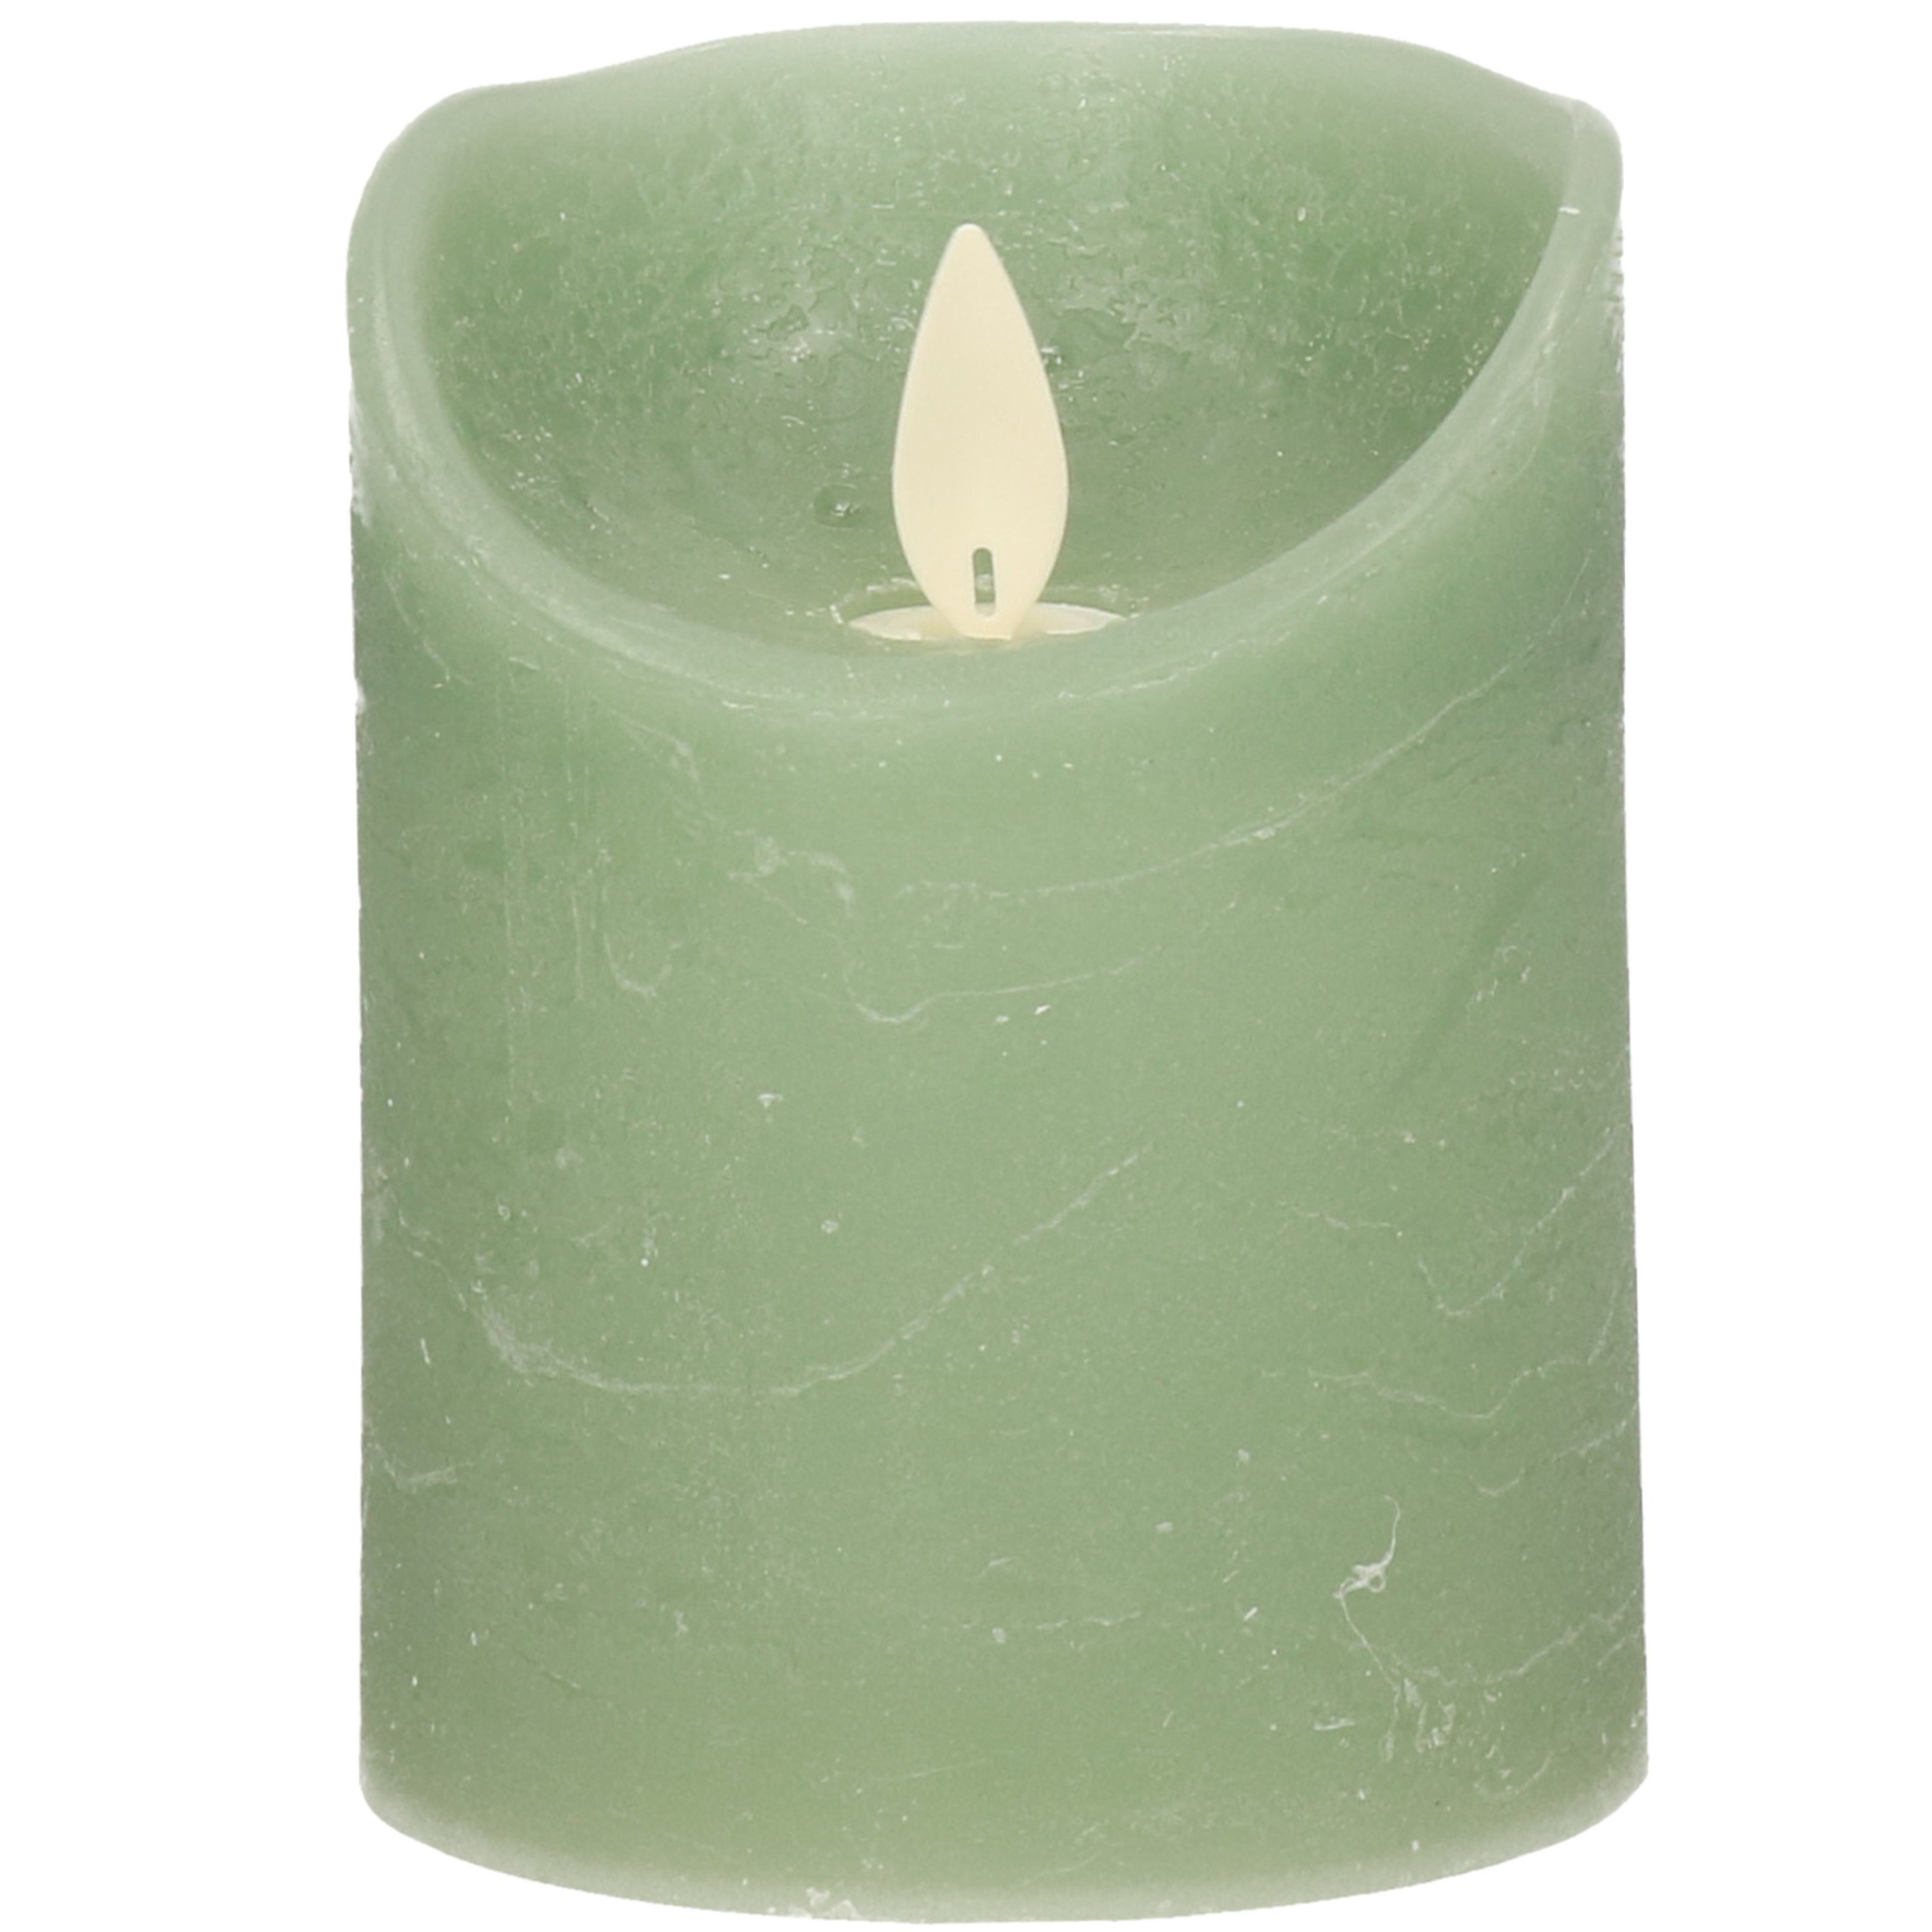 1x Jade groene LED kaarsen - stompkaarsen met bewegende vlam 10 cm